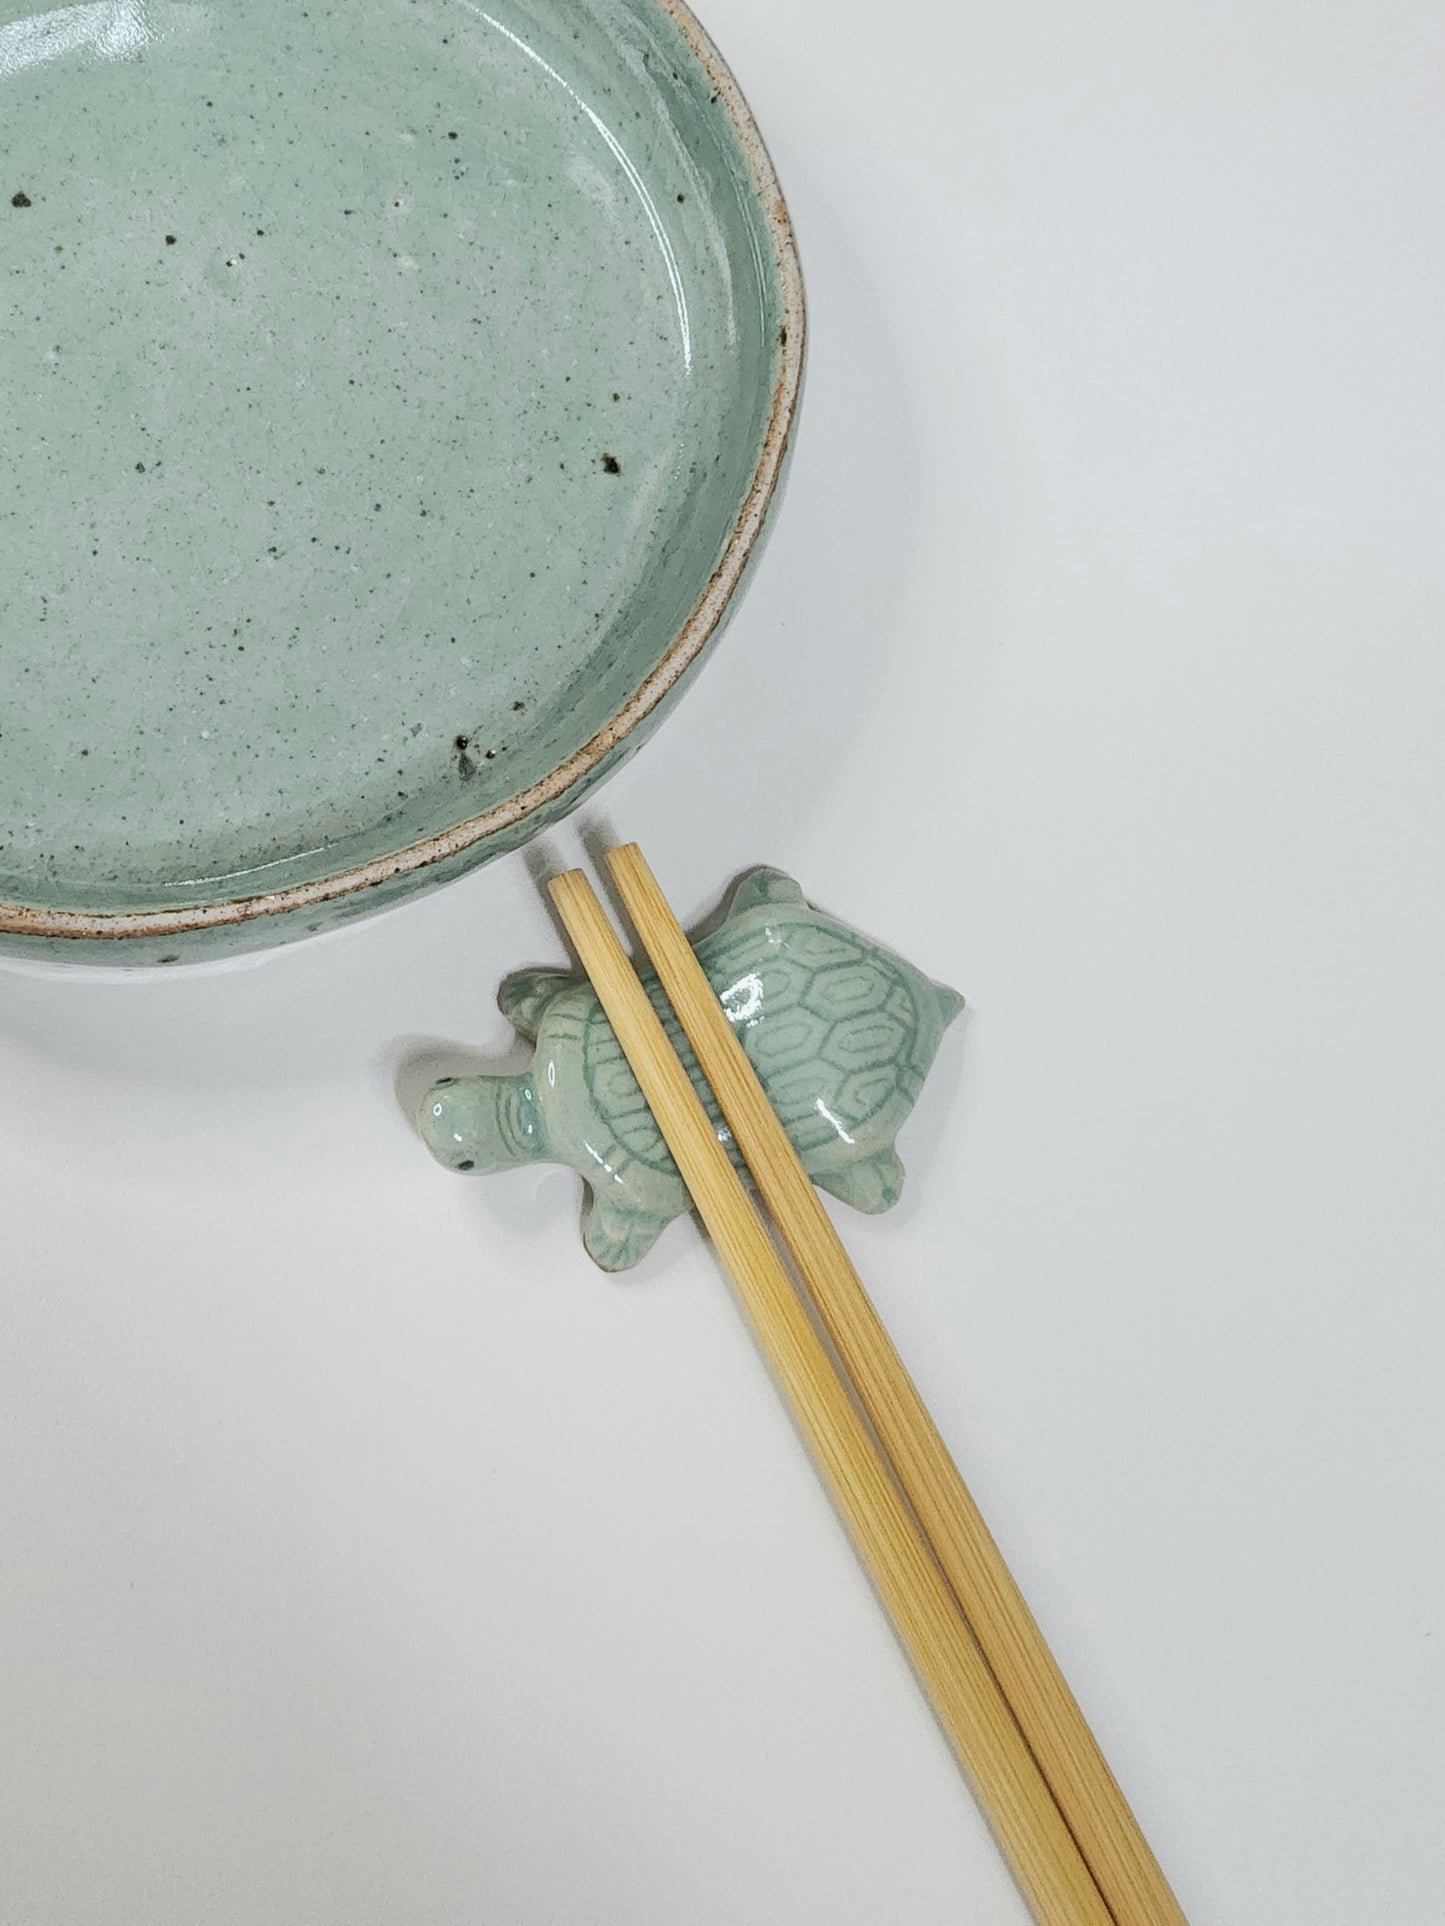 Korean Traditional Celadon Turtle Spoon and Chopsticks Rest 2P set